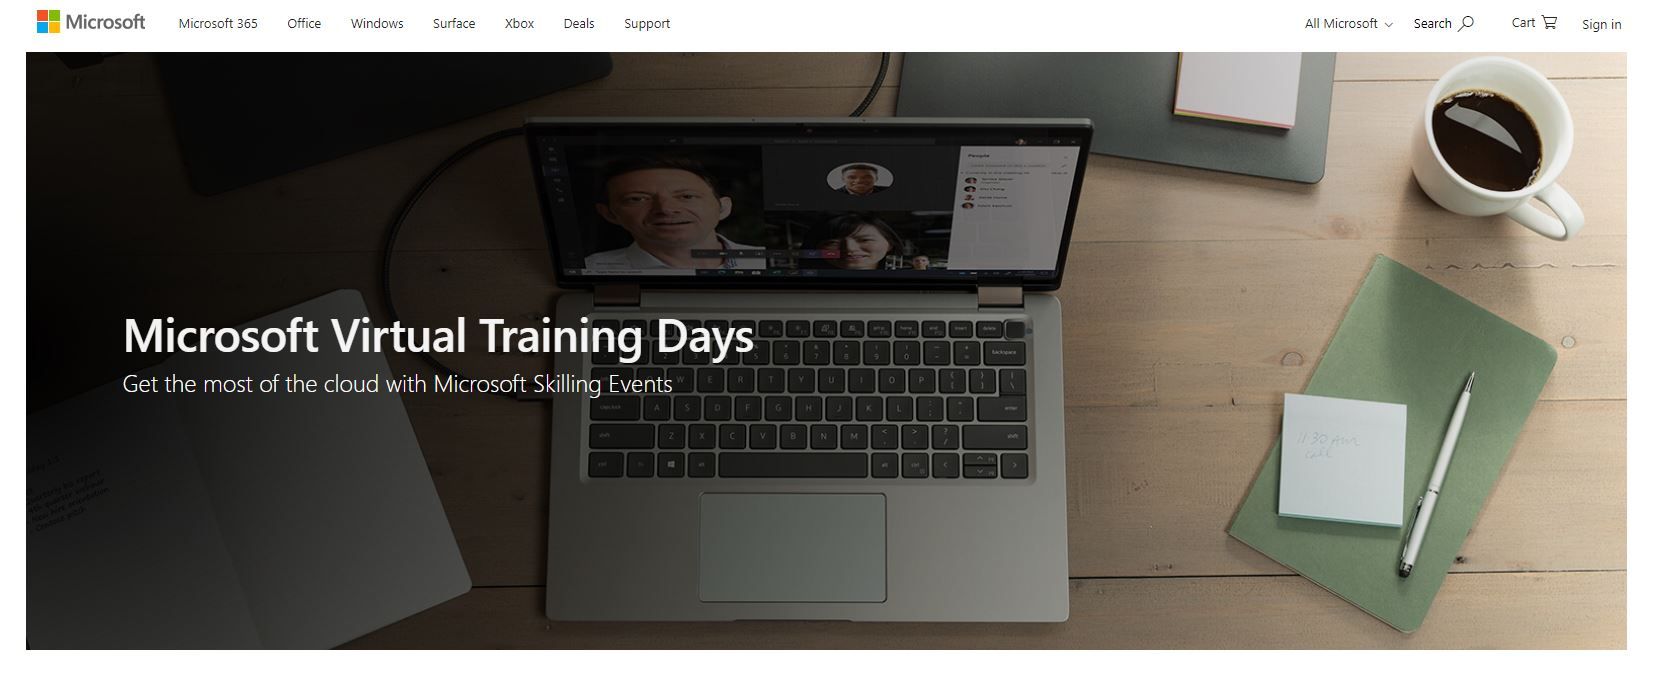 Microsoft virtual training days